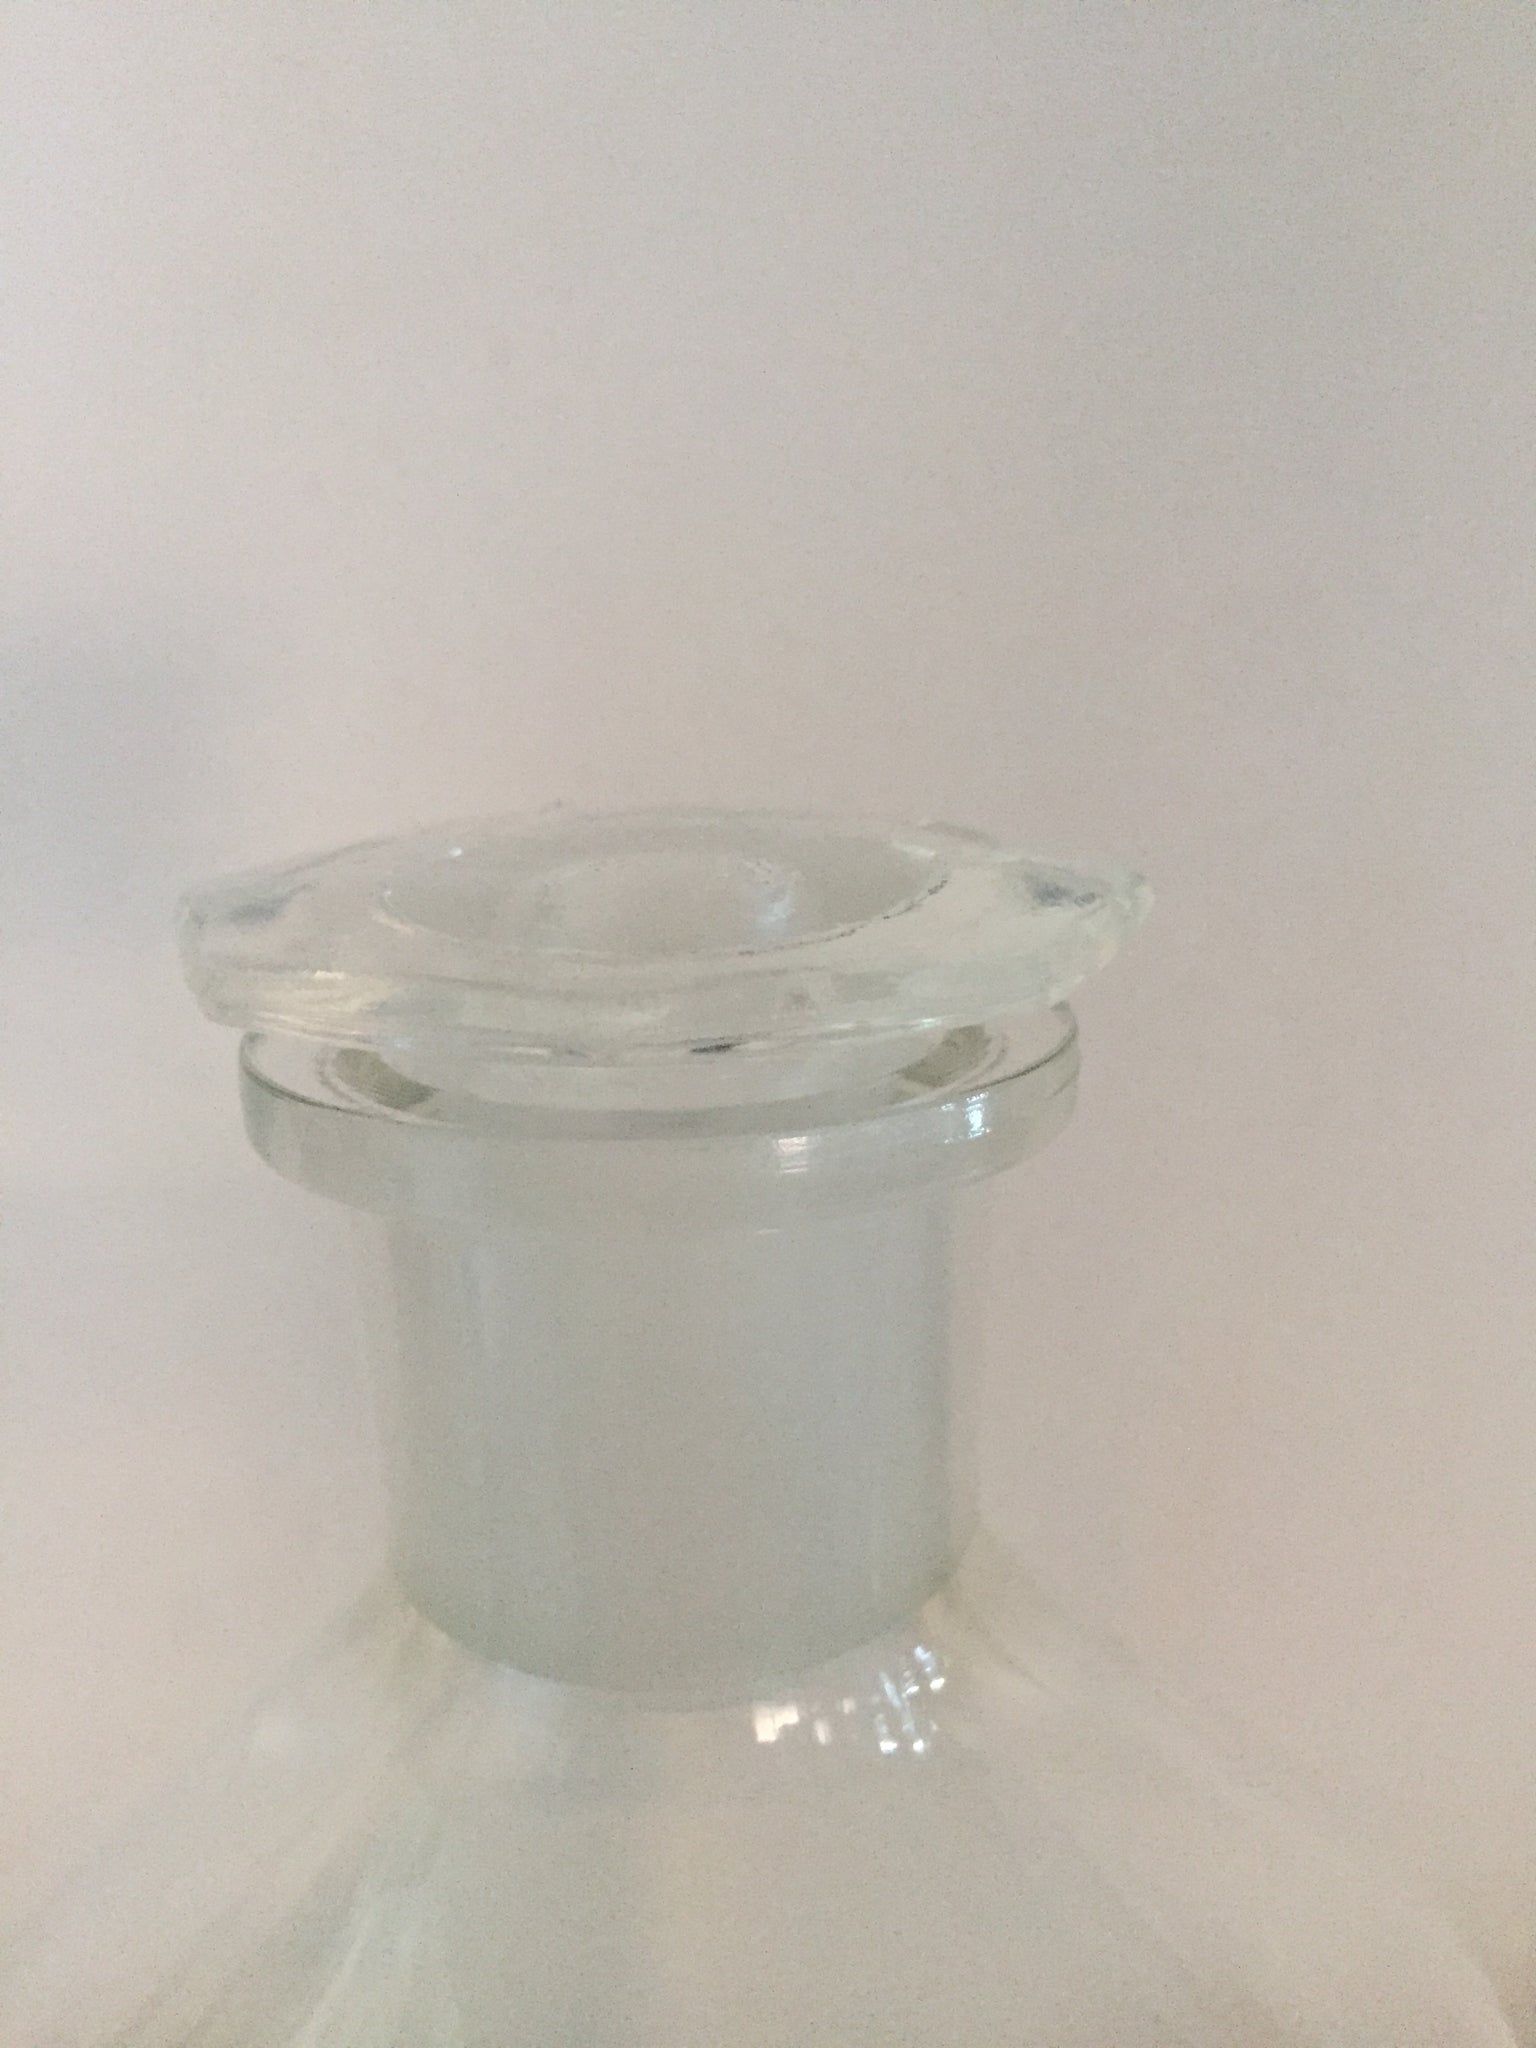 Vintage SCHOTT DURAN 1000ml West German clear glass chemist bottle with glass lid